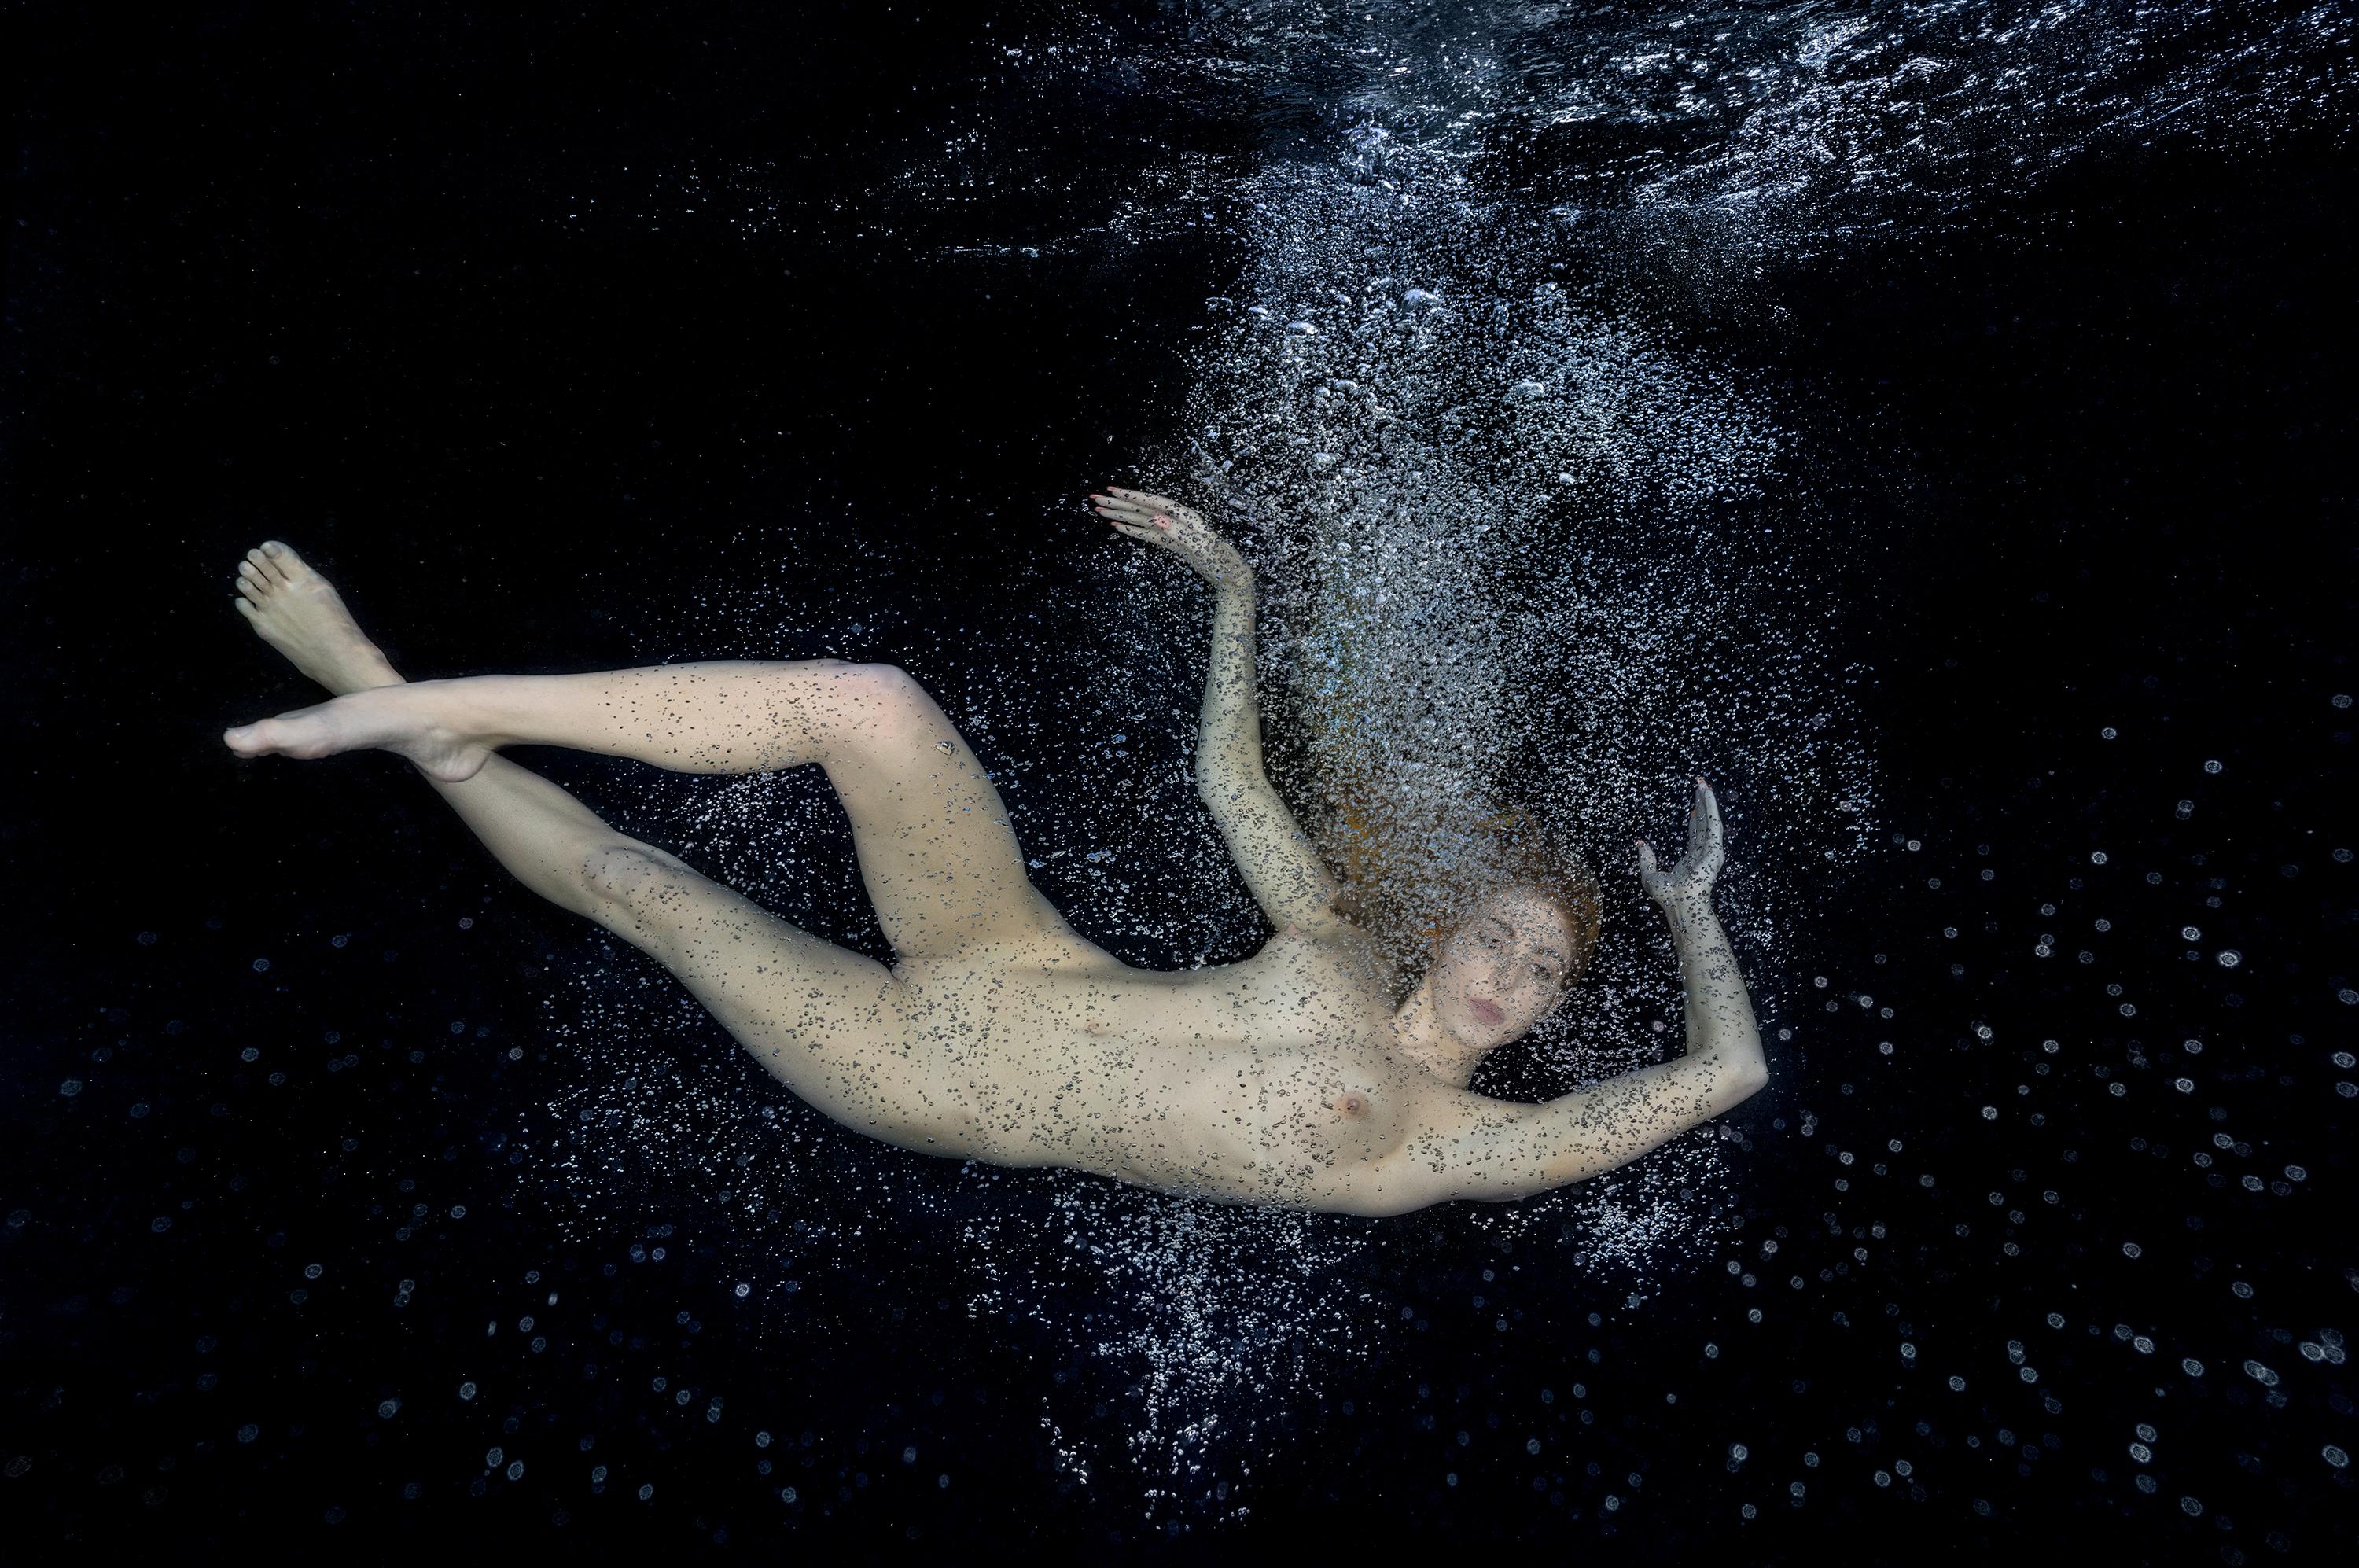 Silver Rain - underwater nude photograph - archival pigment 17" x 24"